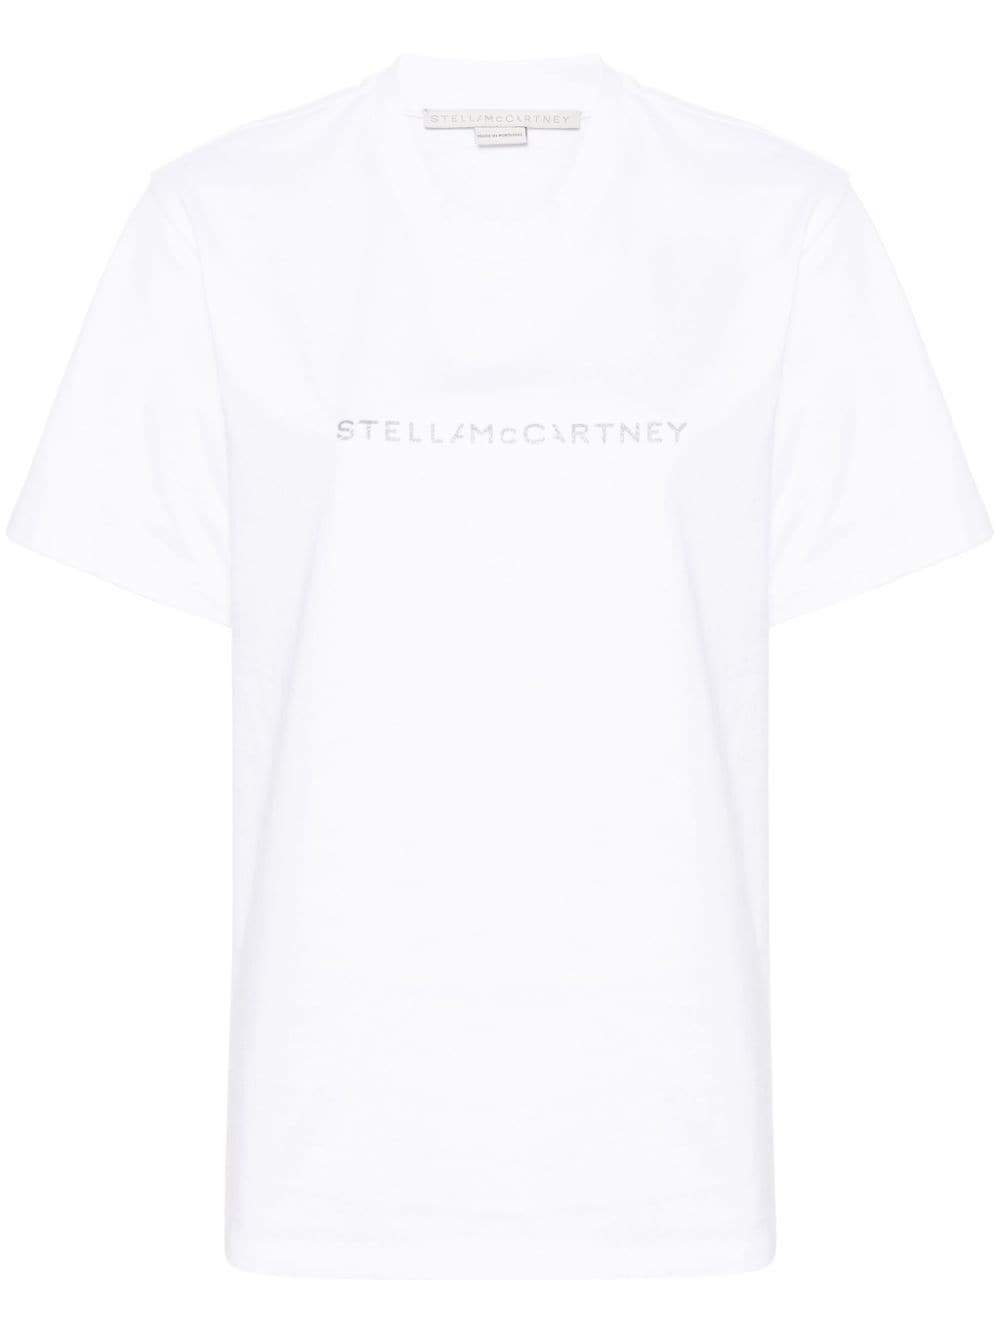 White logo-print cotton T-shirt<BR/><BR/><BR/>